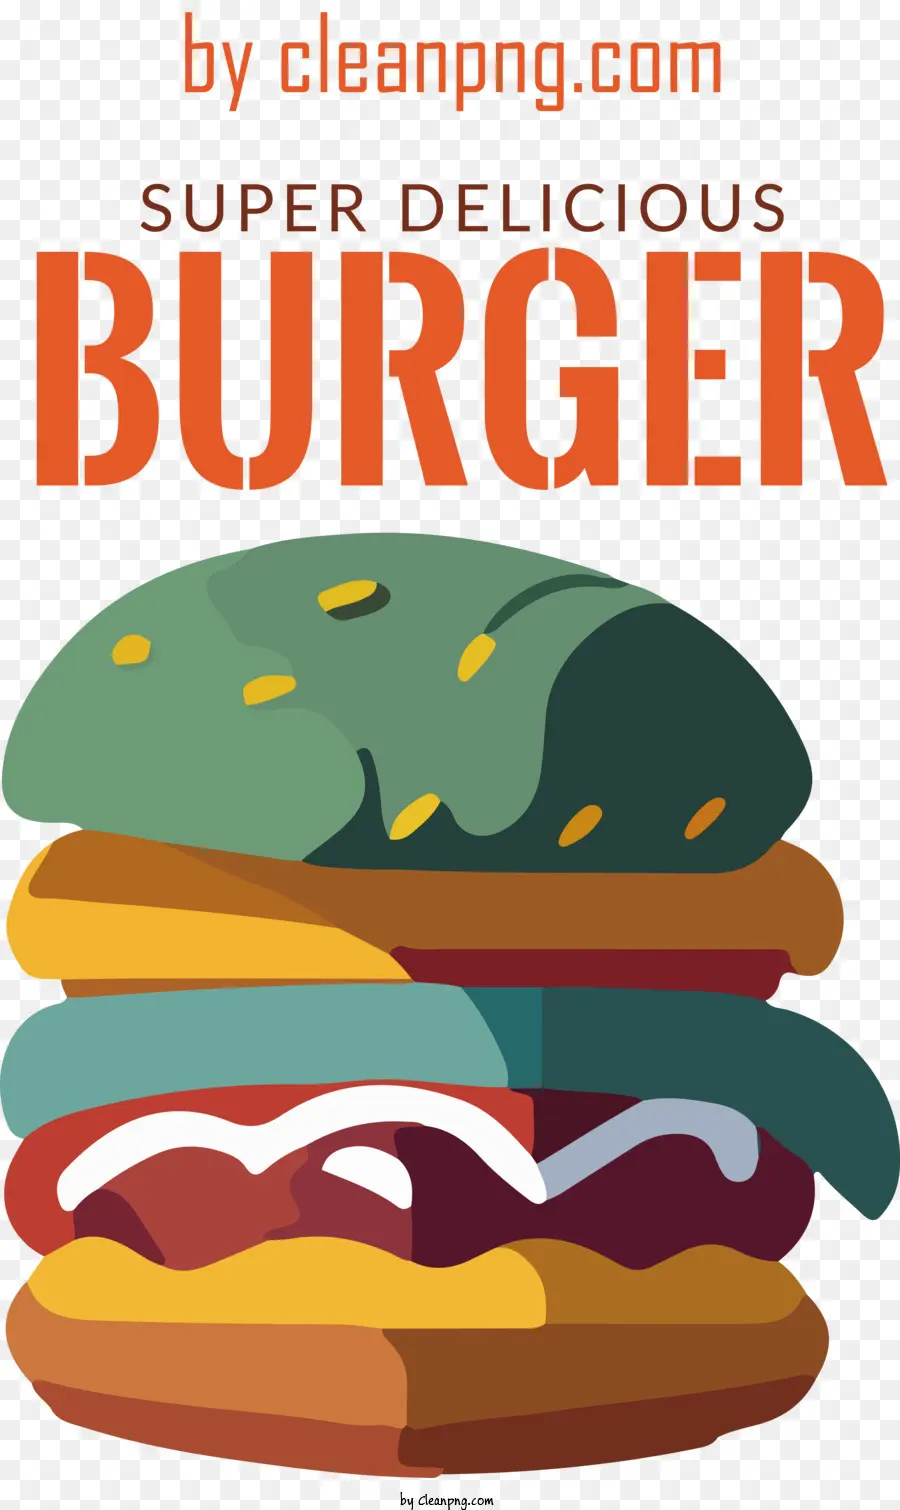 Delicious Burger International Burger Day Fast Food - 